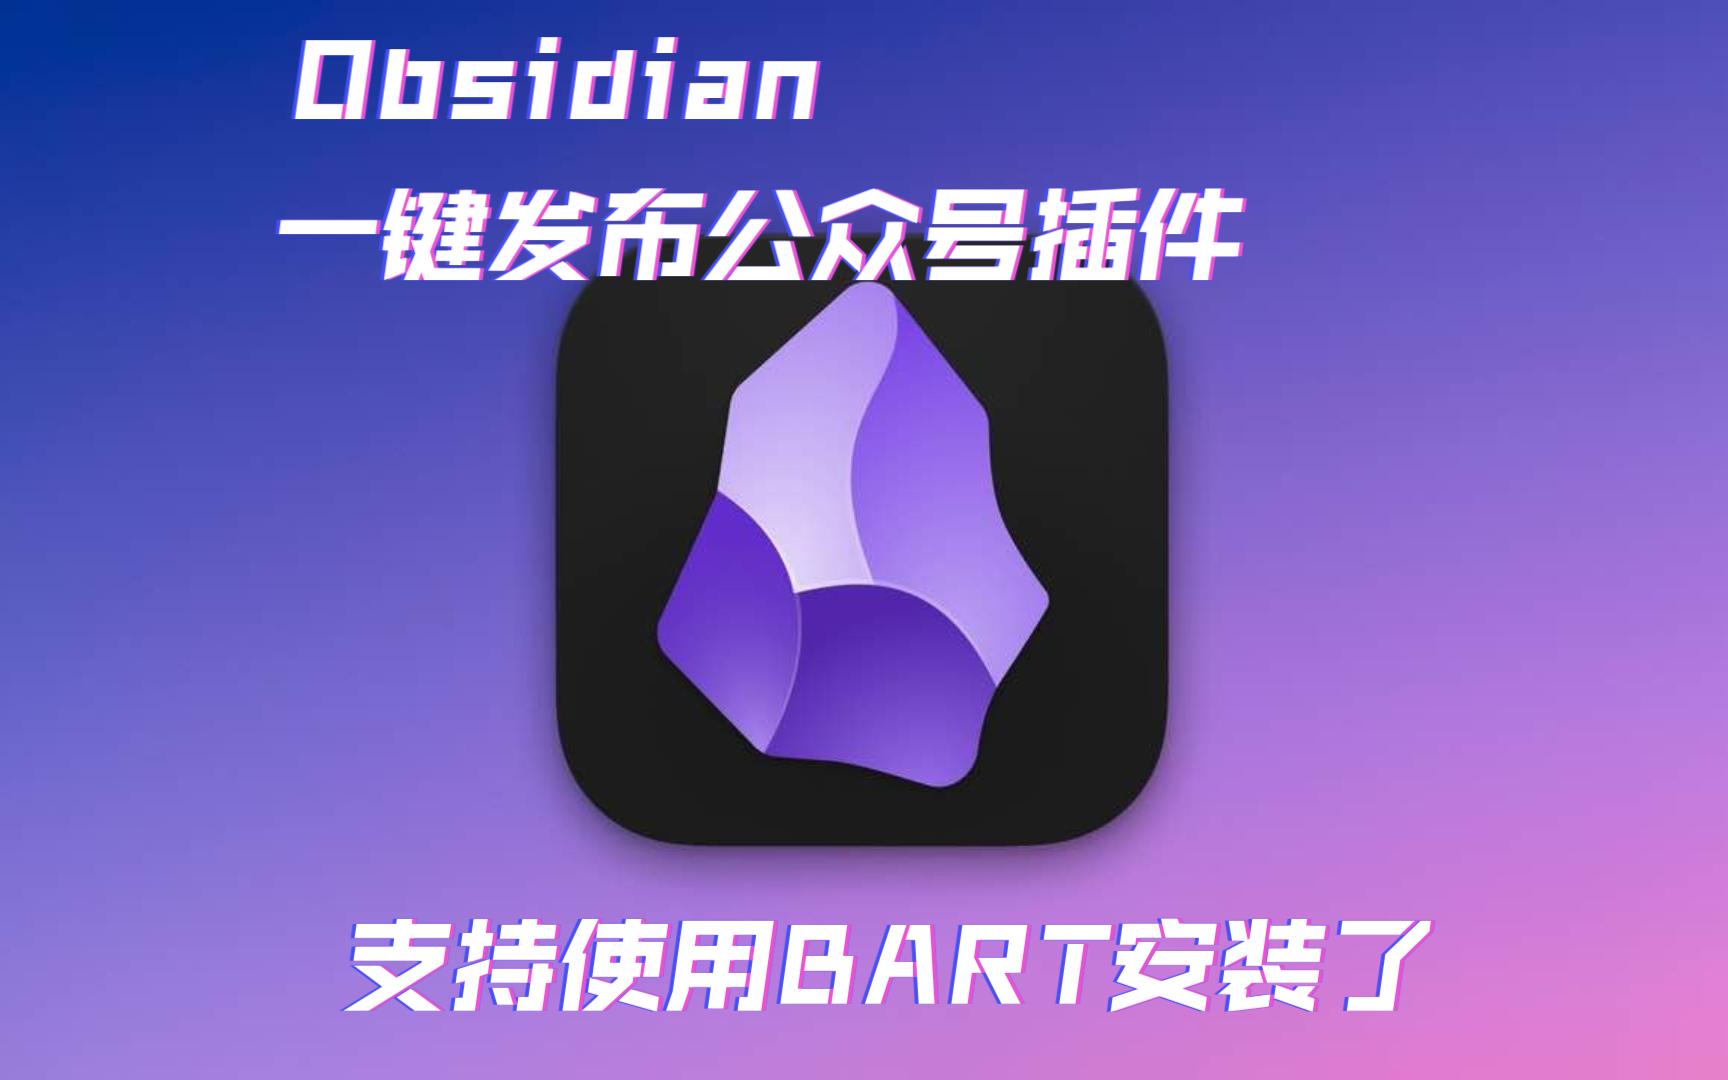 Obsidian一键发布公众号插件又更新了！支持BART插件安装，新增代码高亮主题，优化公众号文章链接！快来更新吧！